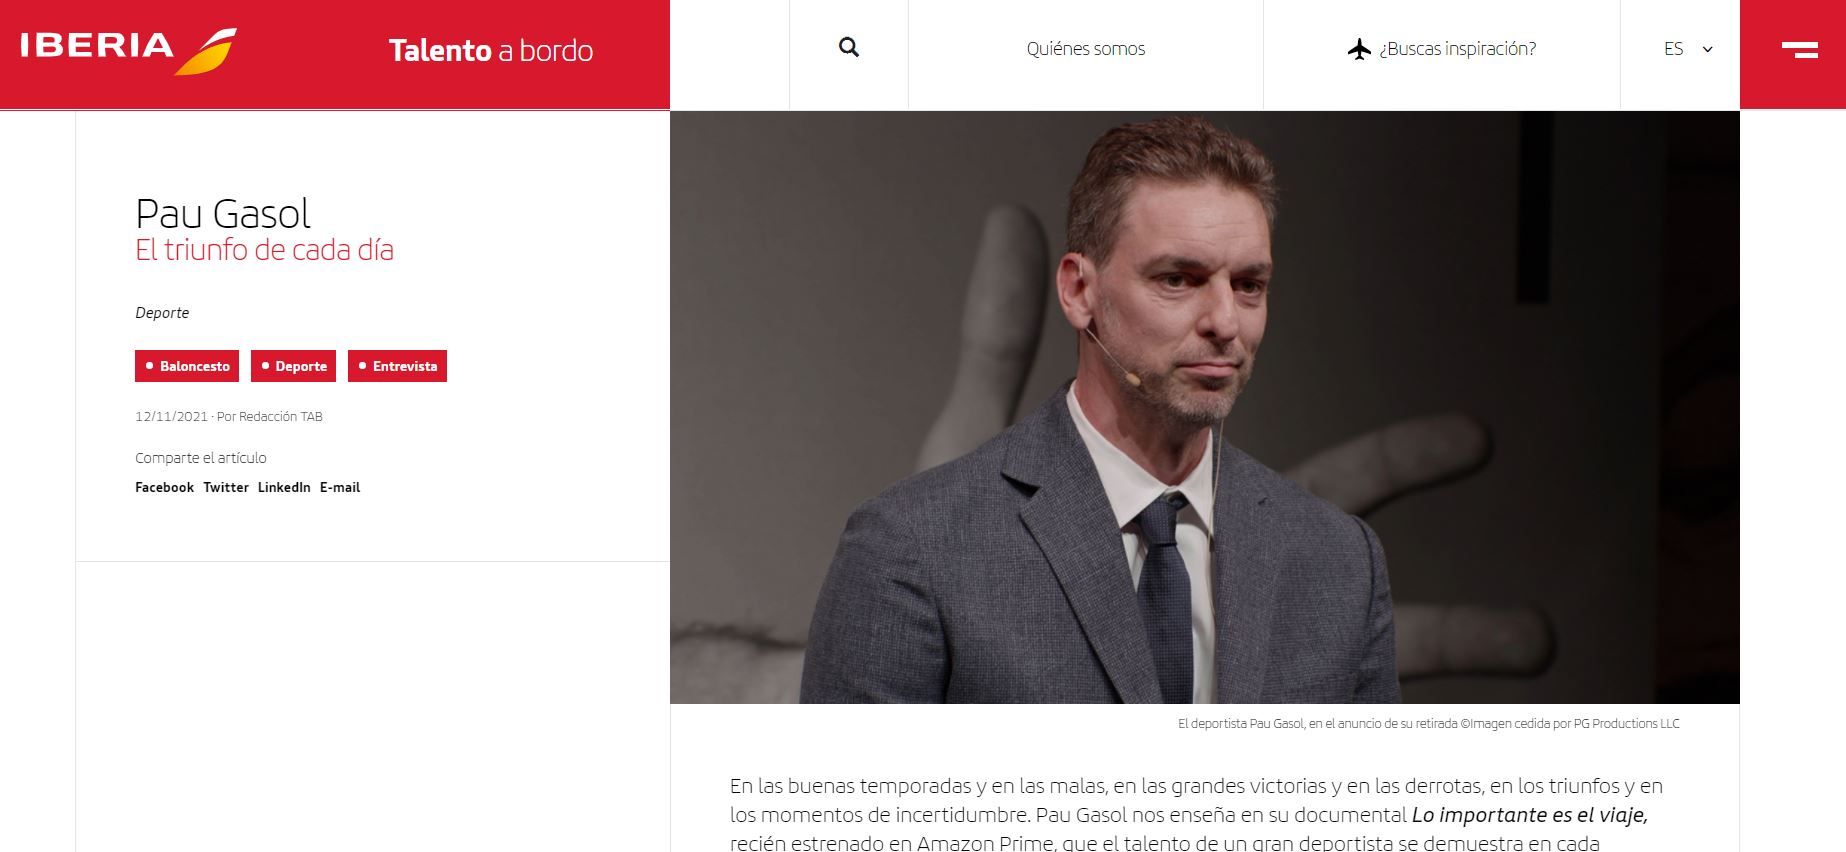 Entrevista a Pau Gasol en la plataforma digital 'Talento a bordo' de Iberia.